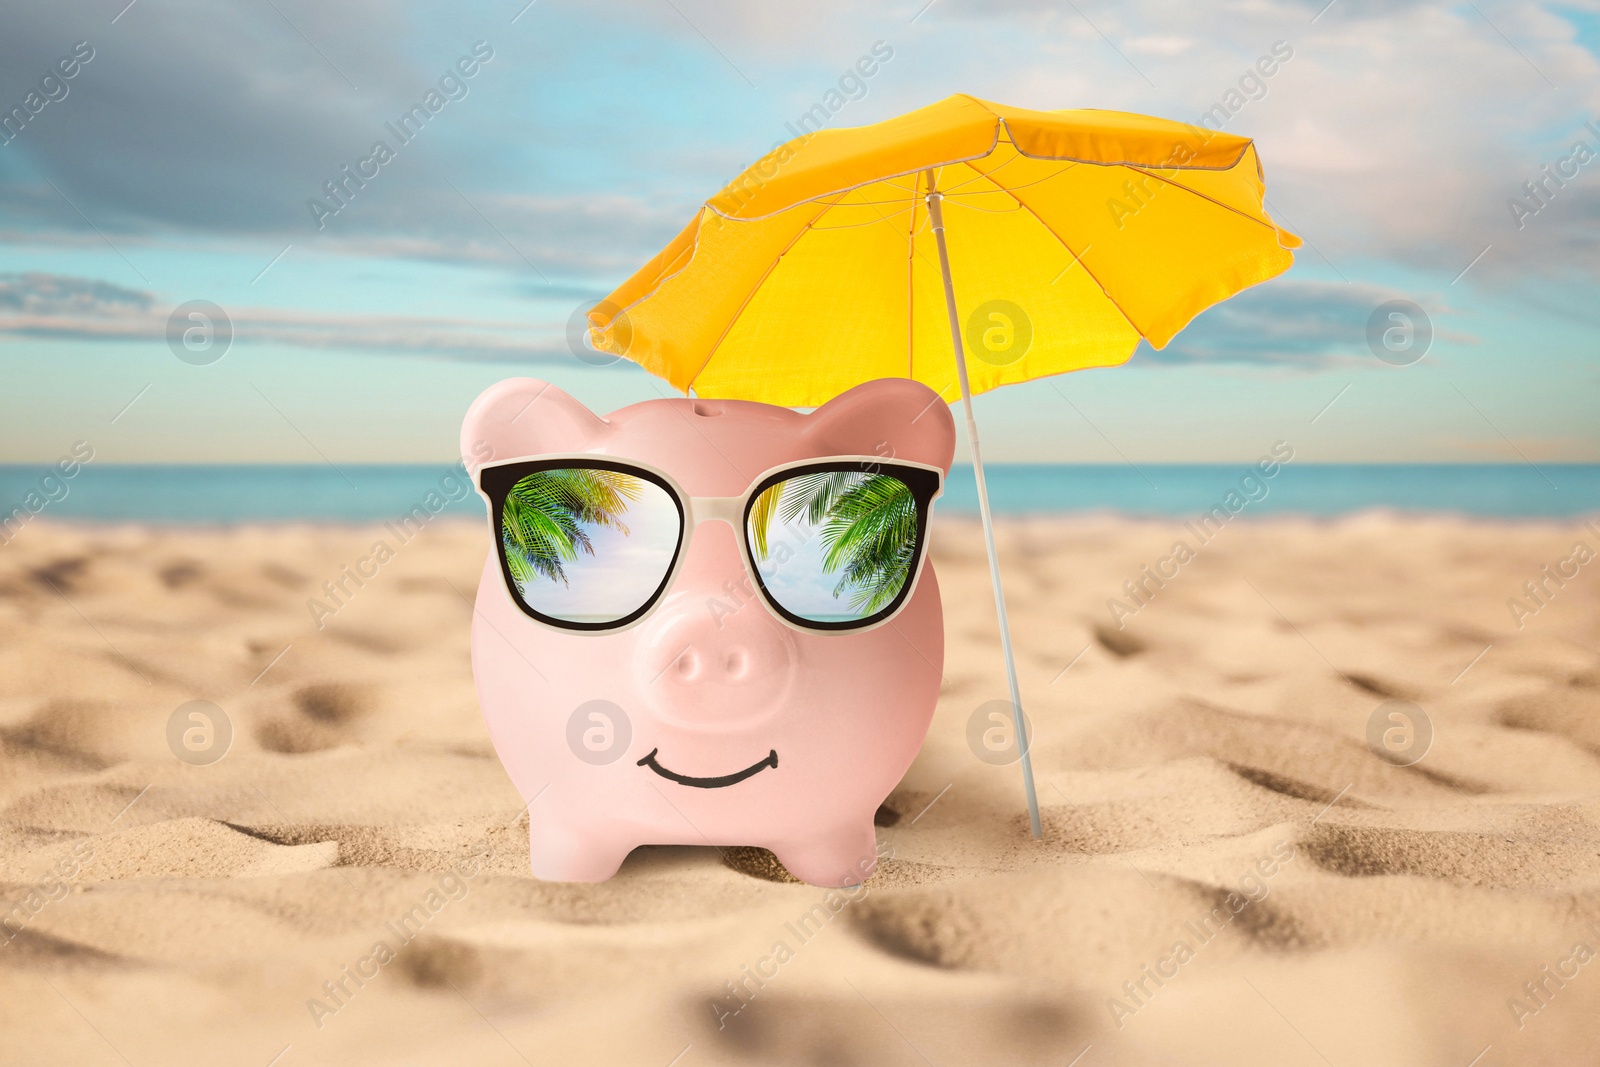 Image of Vacation savings. Piggy bank near umbrella on sandy beach near sea. Reflection of palm leaves in sunglasses